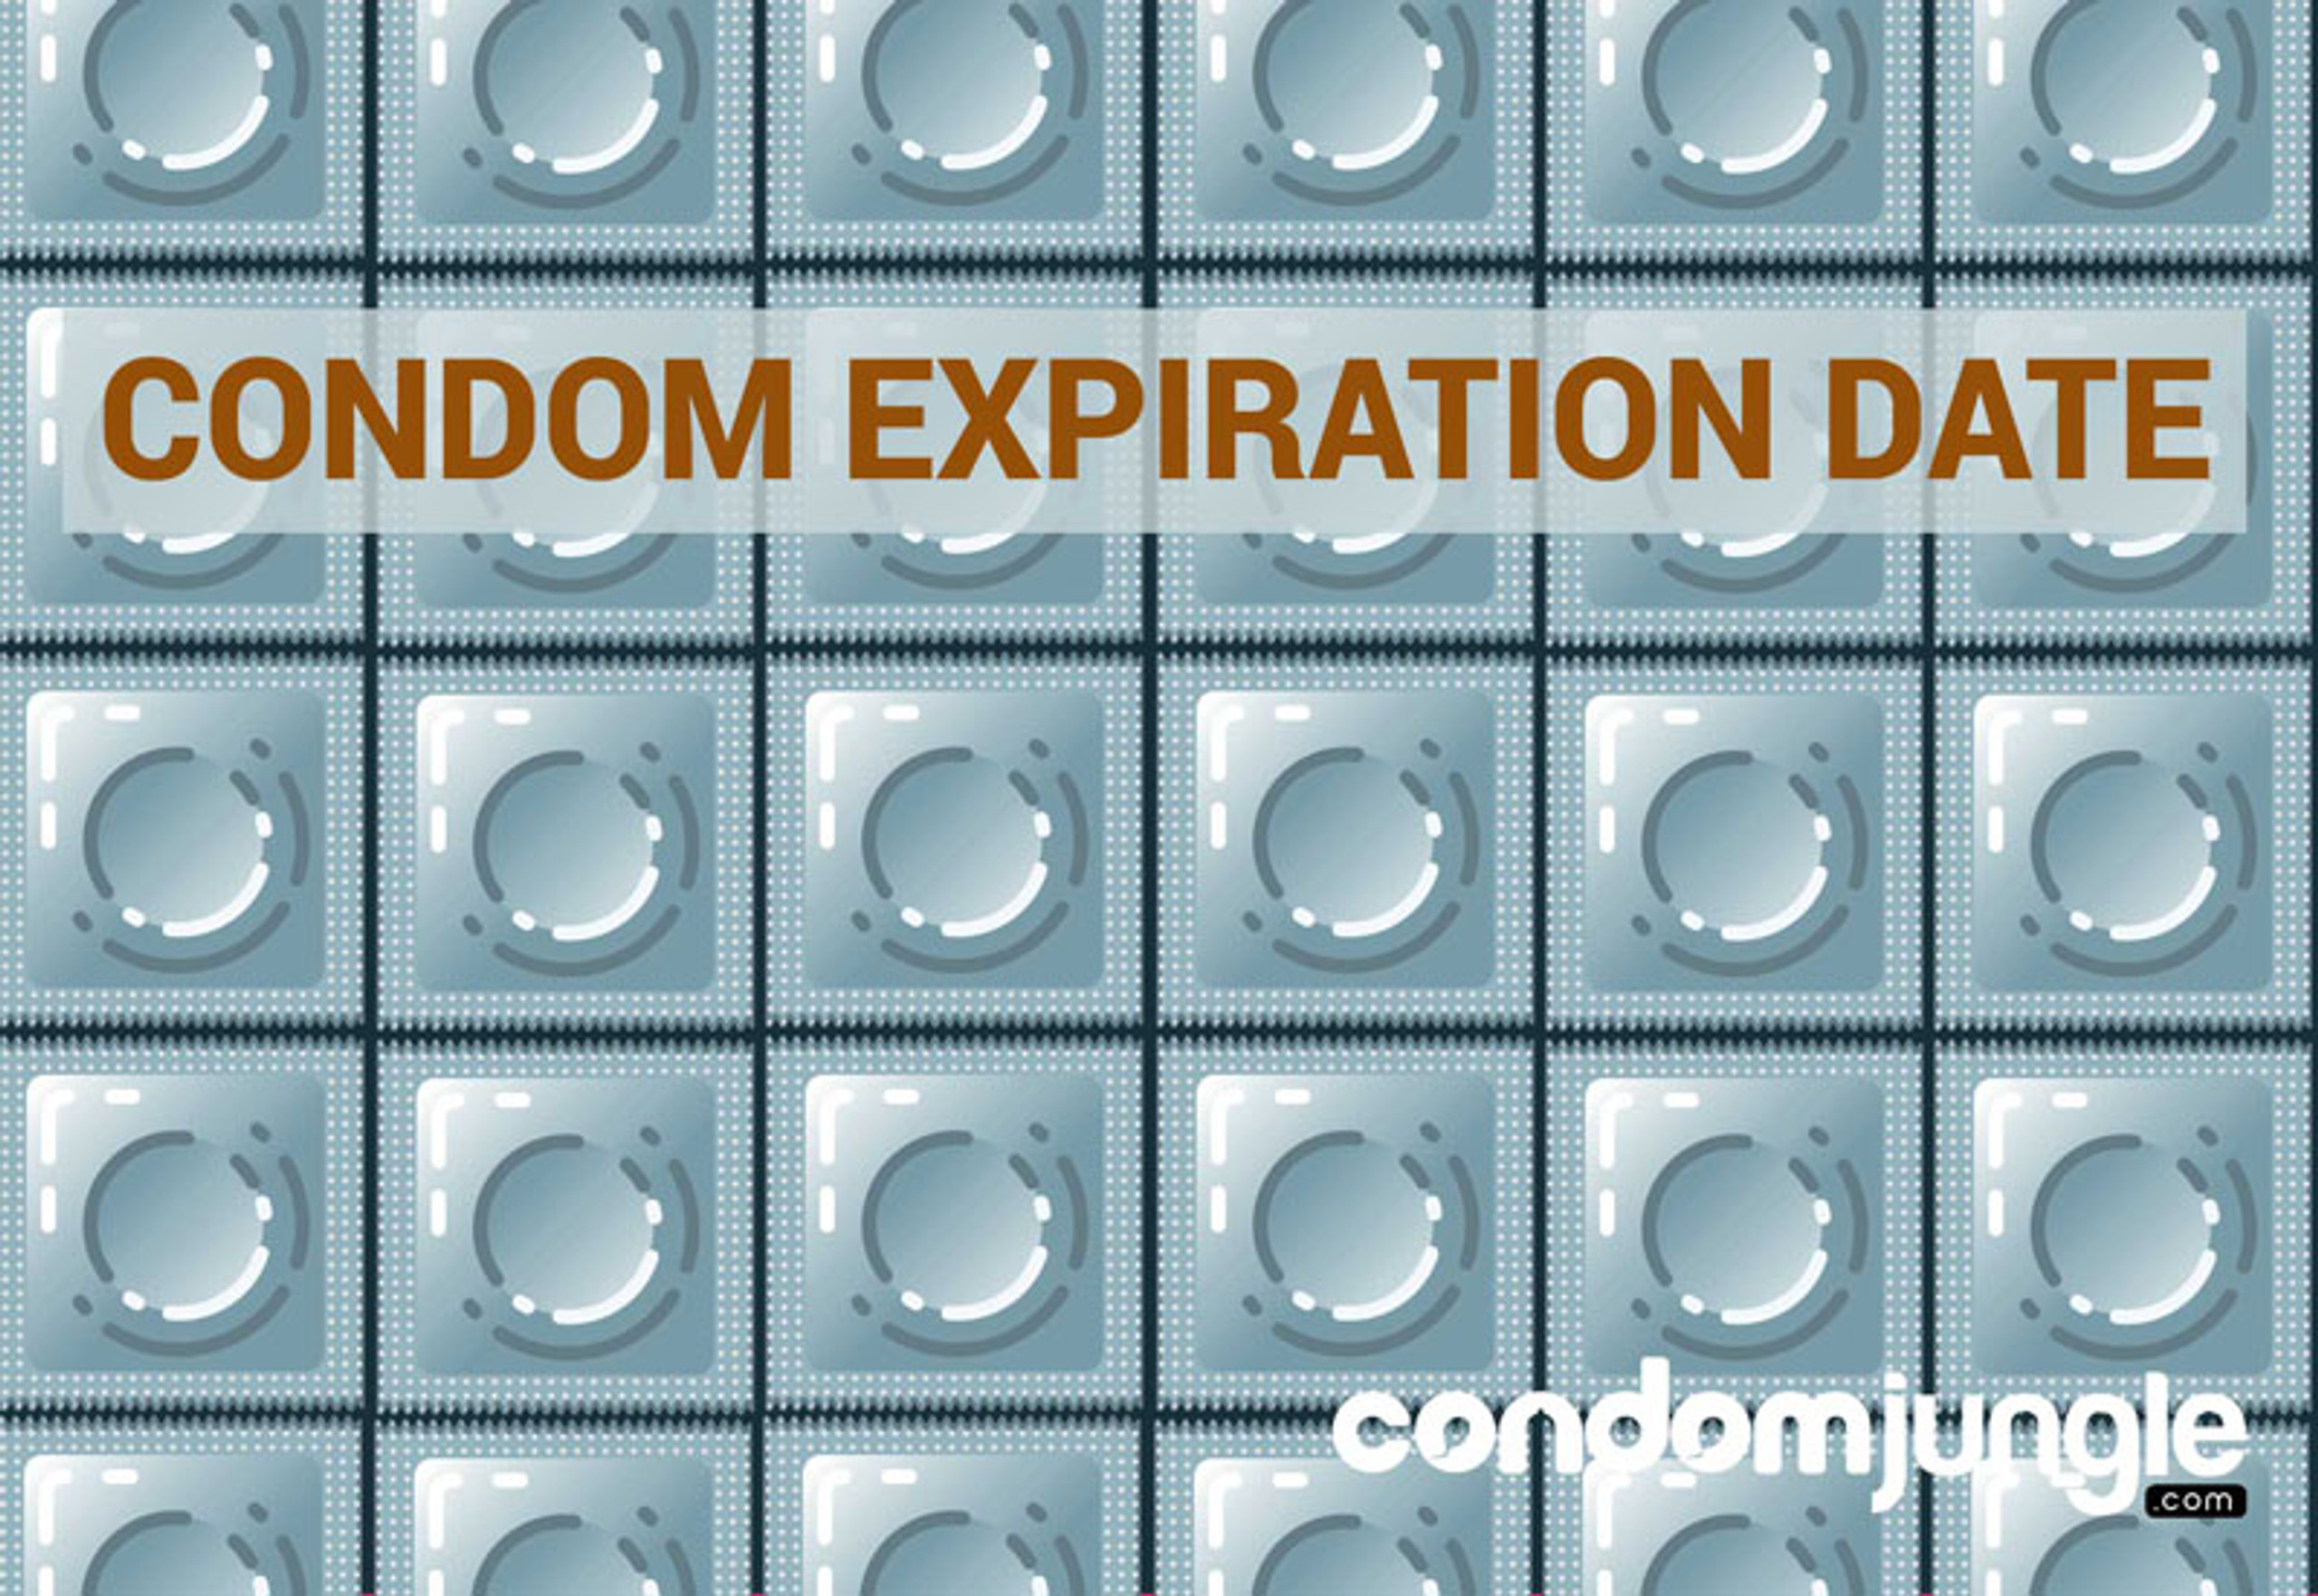 Do Condoms Expire 